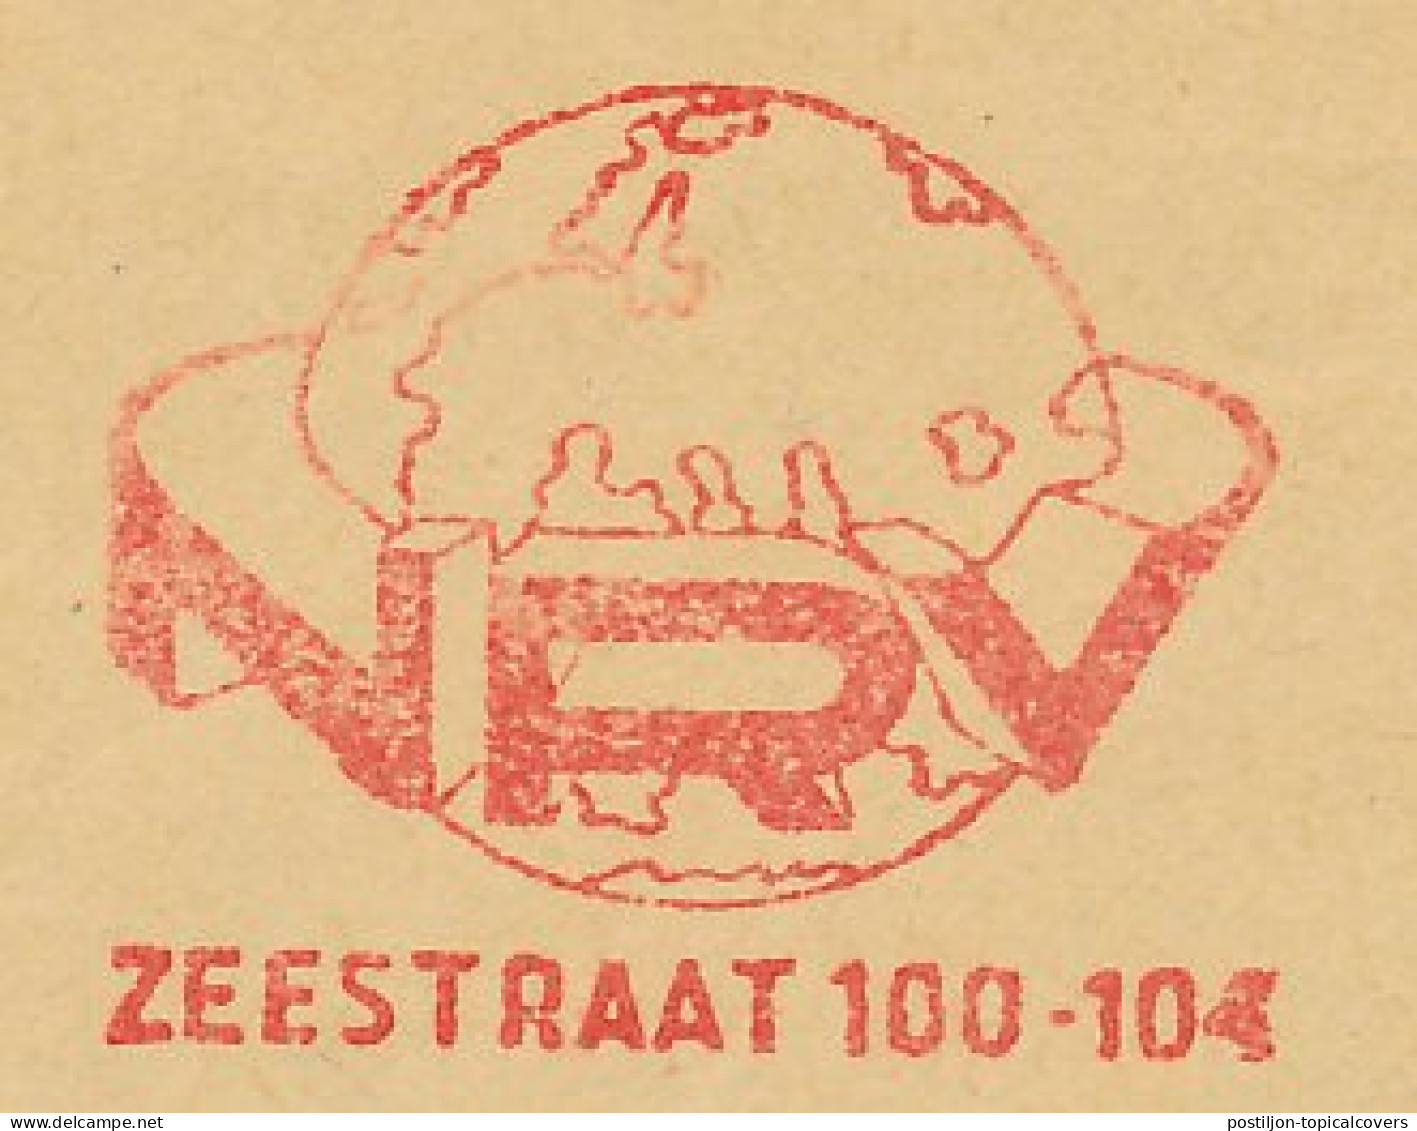 Meter Cover Netherlands 1953 Globe - NRV - Dutch Travel Association - The Hague - Geografía